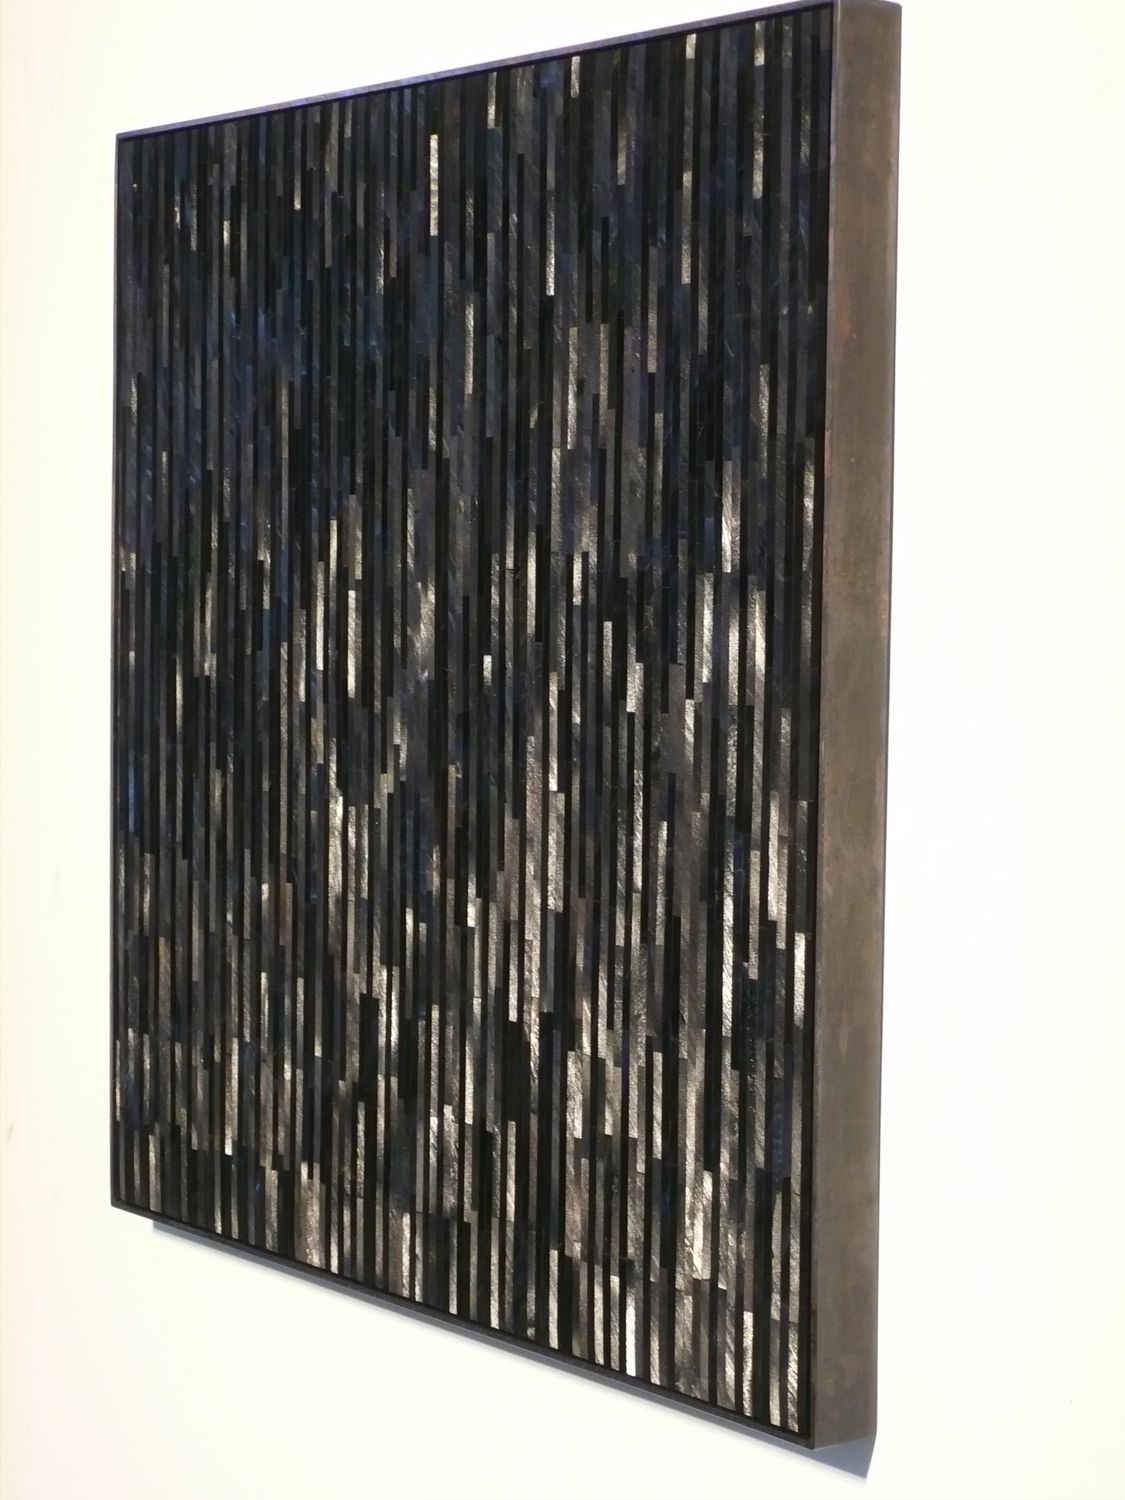 Charcoal Mirror #17, 20"x20"x1-3/4", charcoal, bronze frame